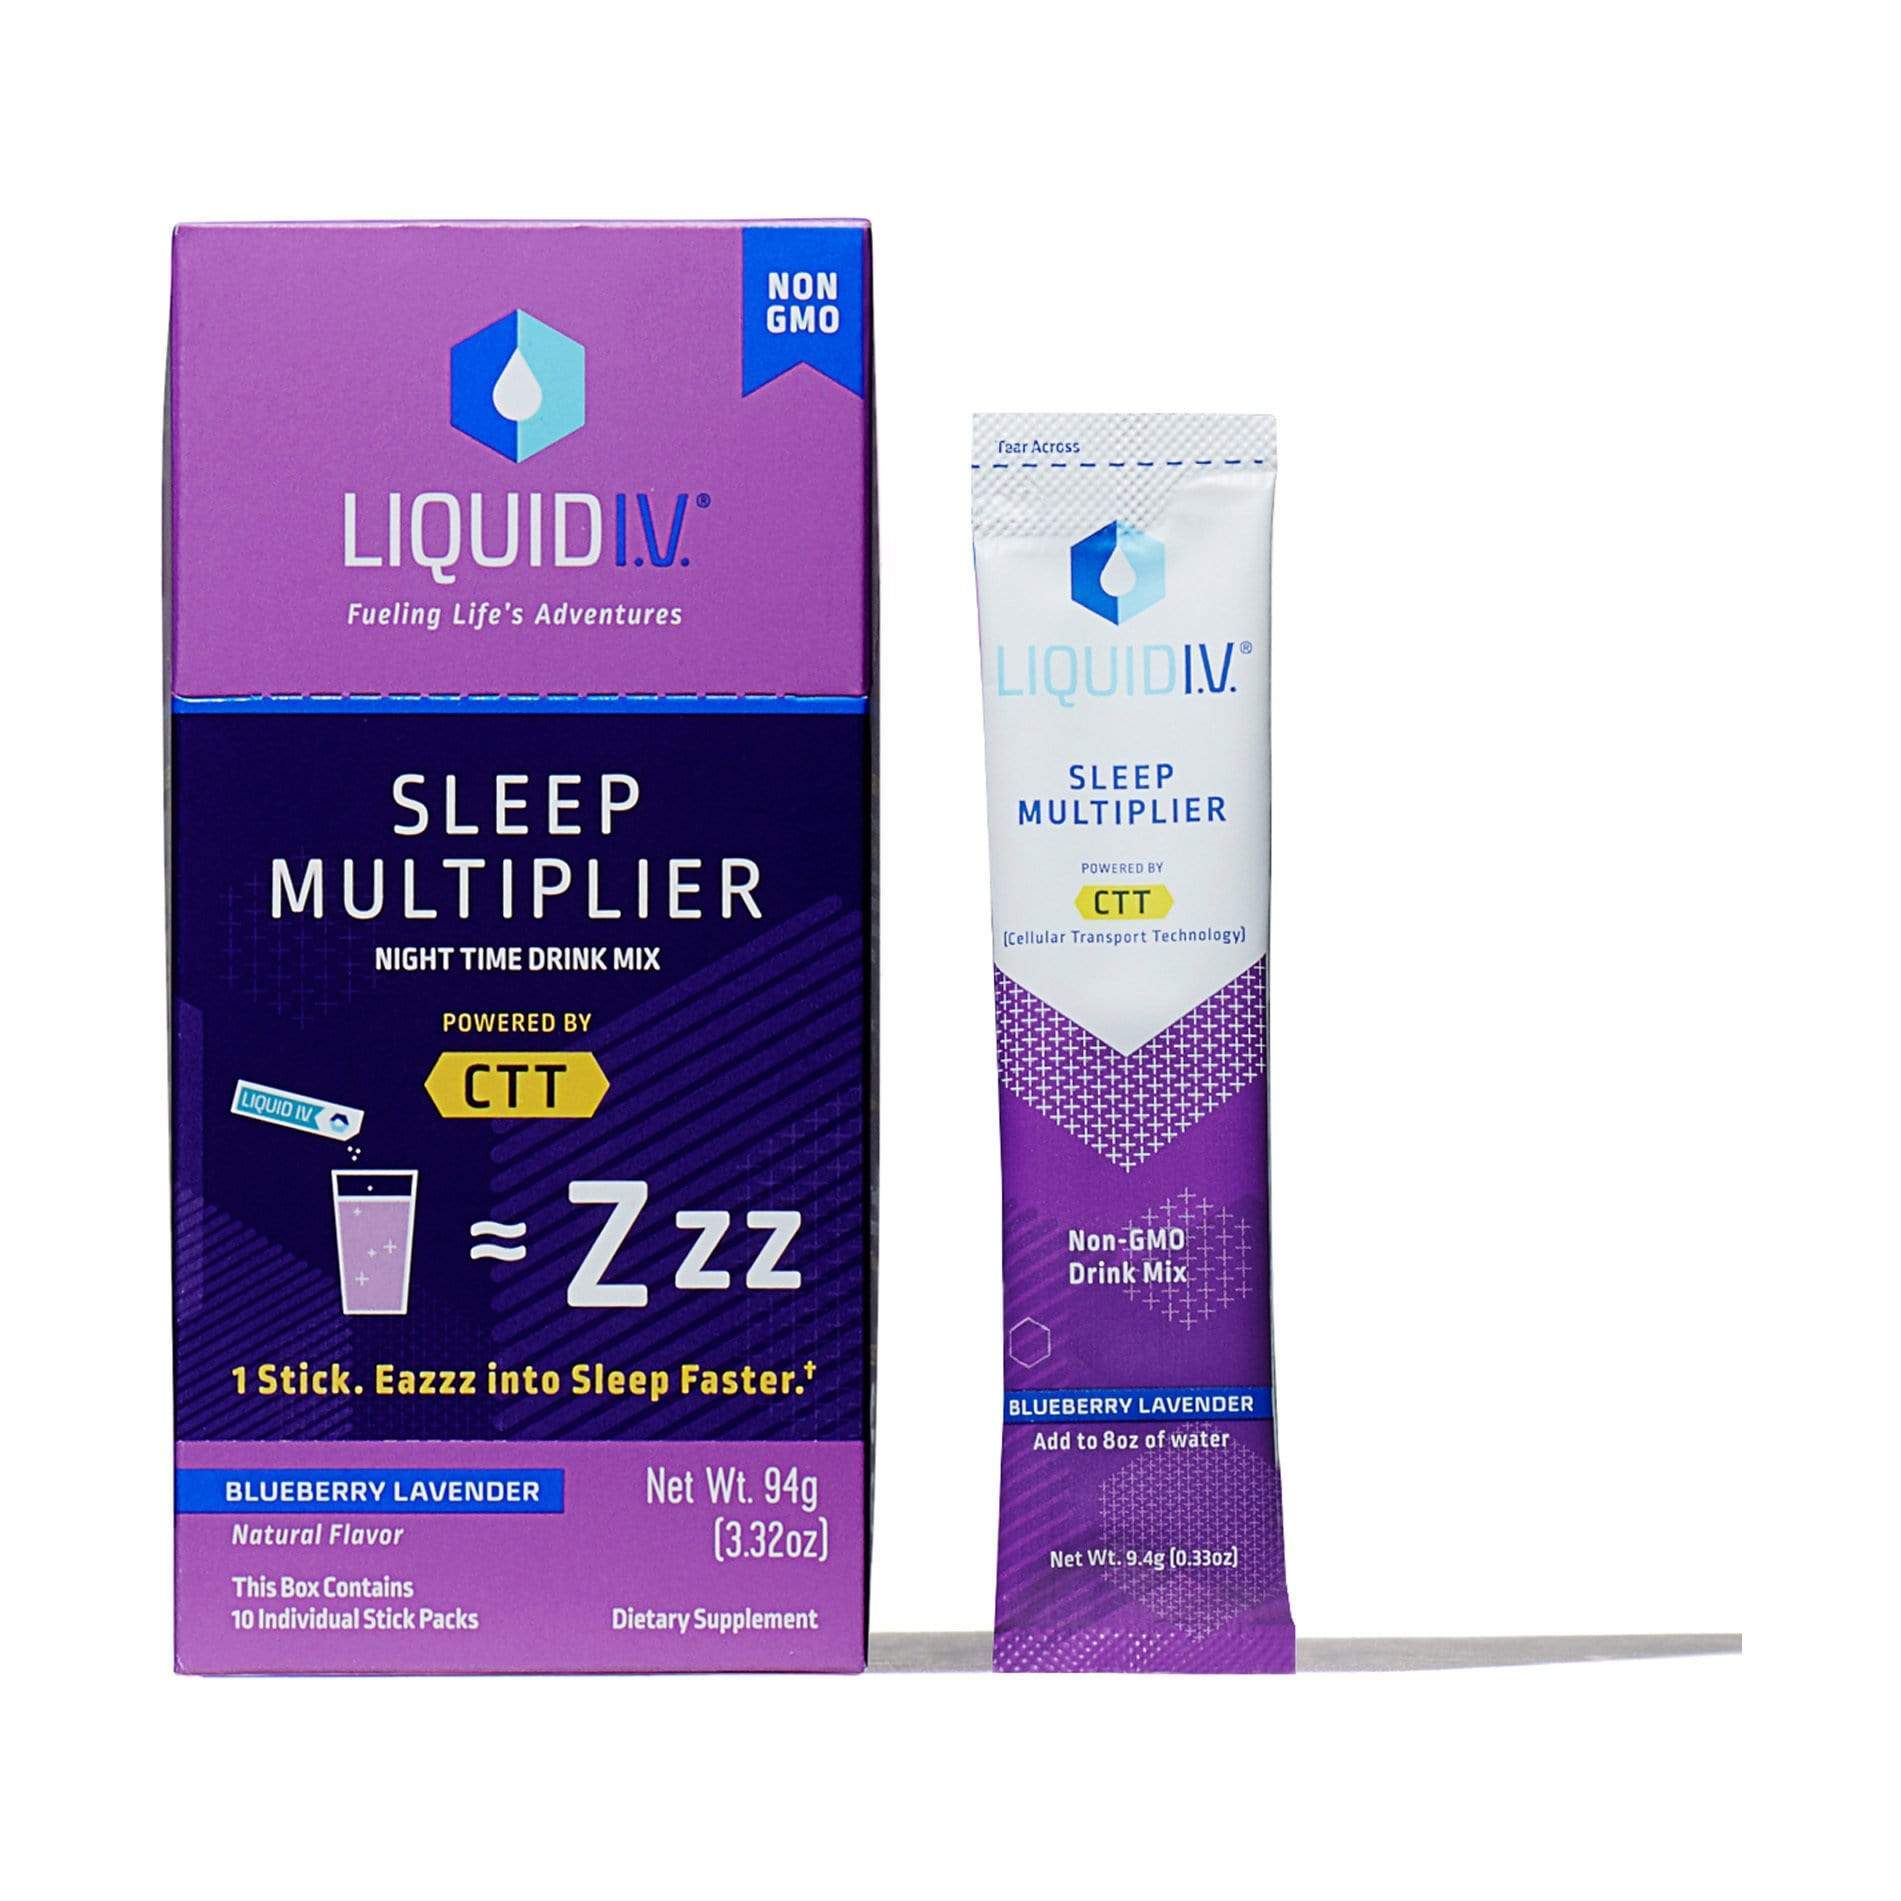 Liquid IV Sleep Multiplier: Your Fast-Acting, Natural Sleep Solution